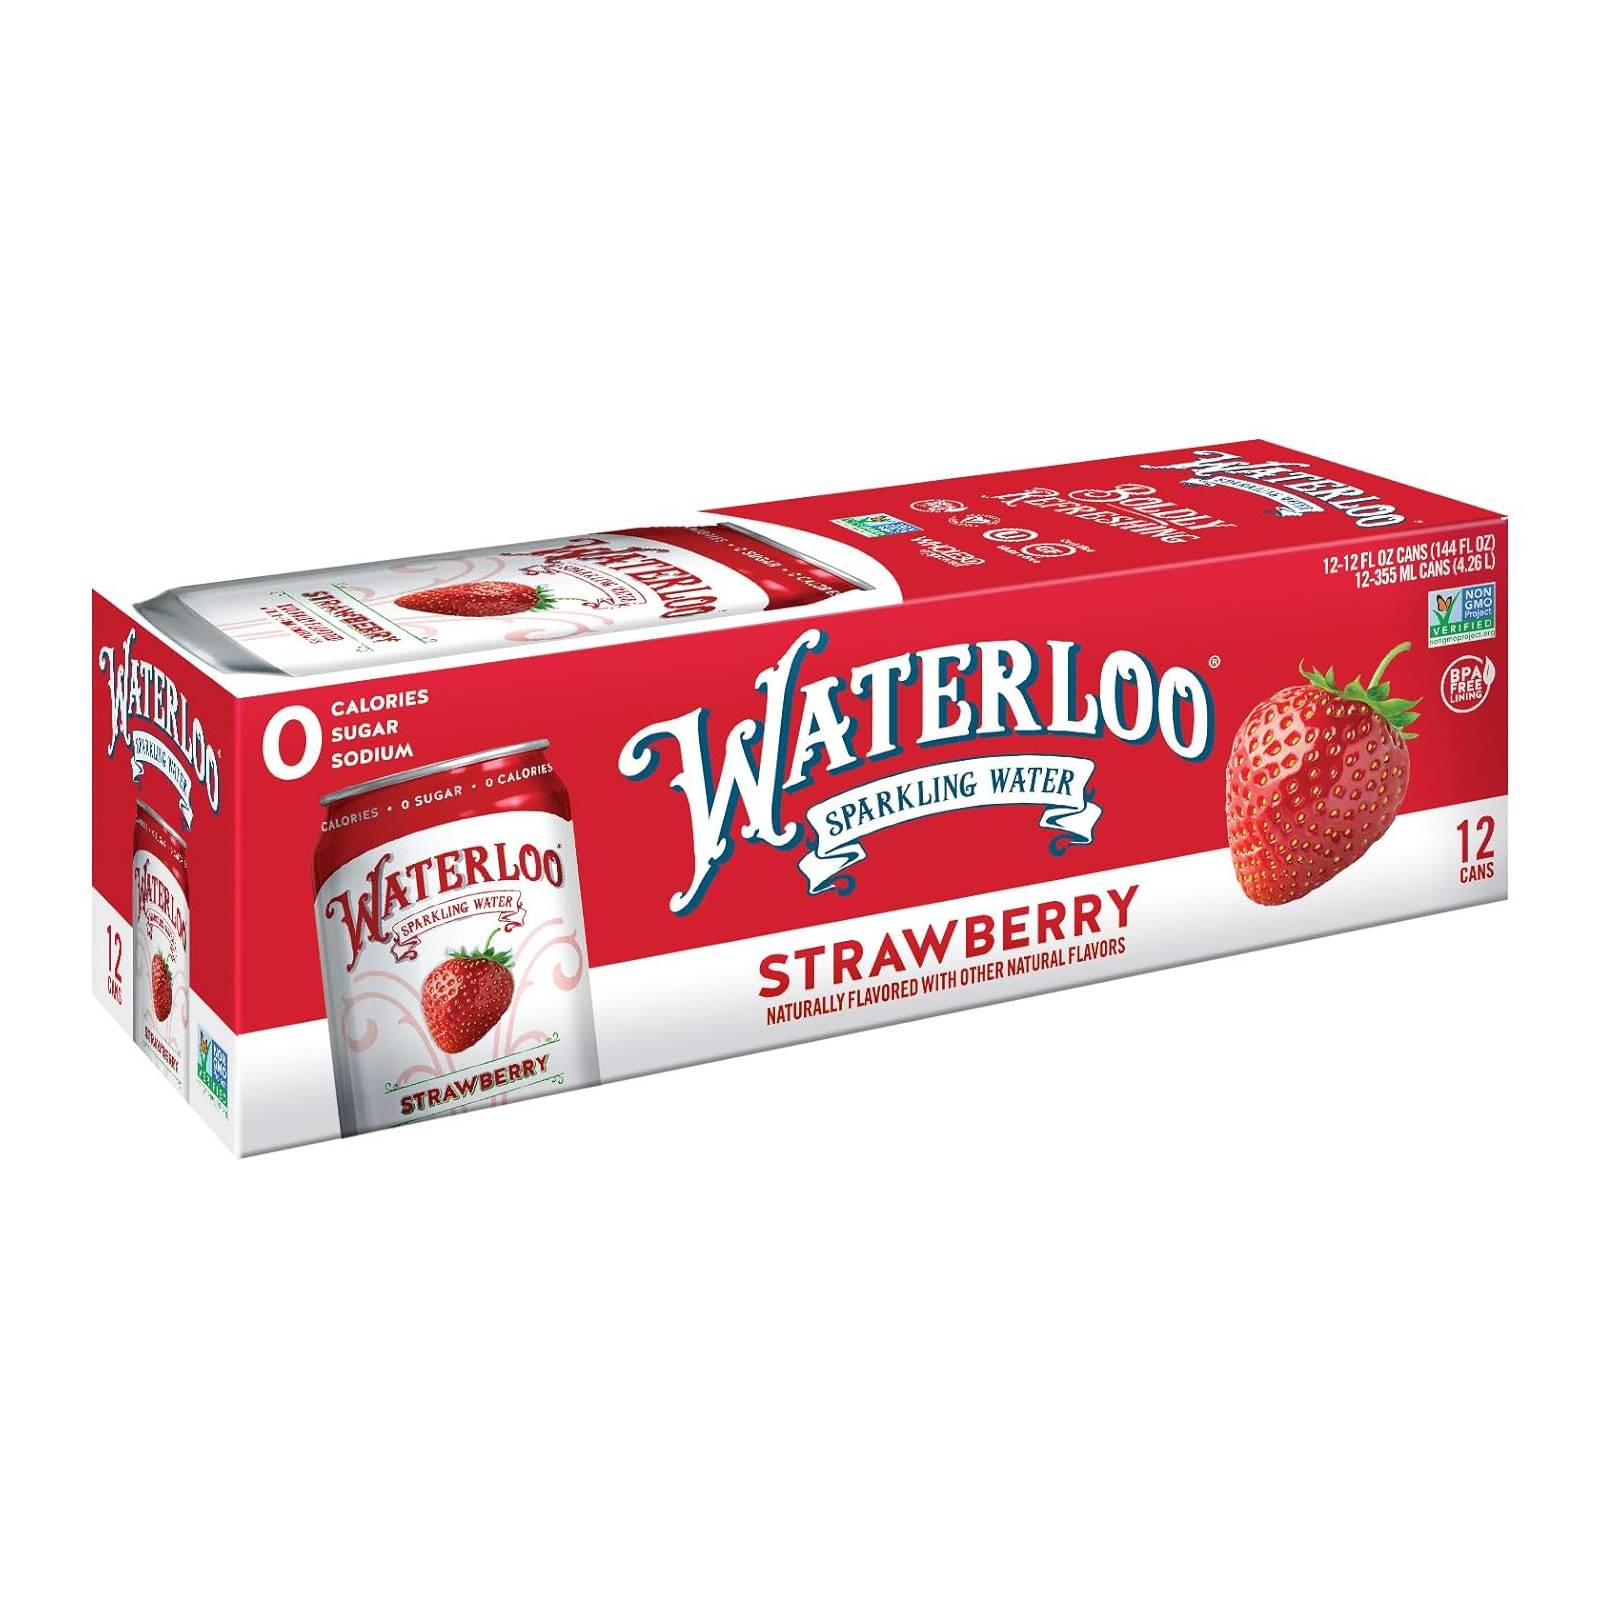 Waterloo Sparkling Water Strawberry / 144 fl. oz